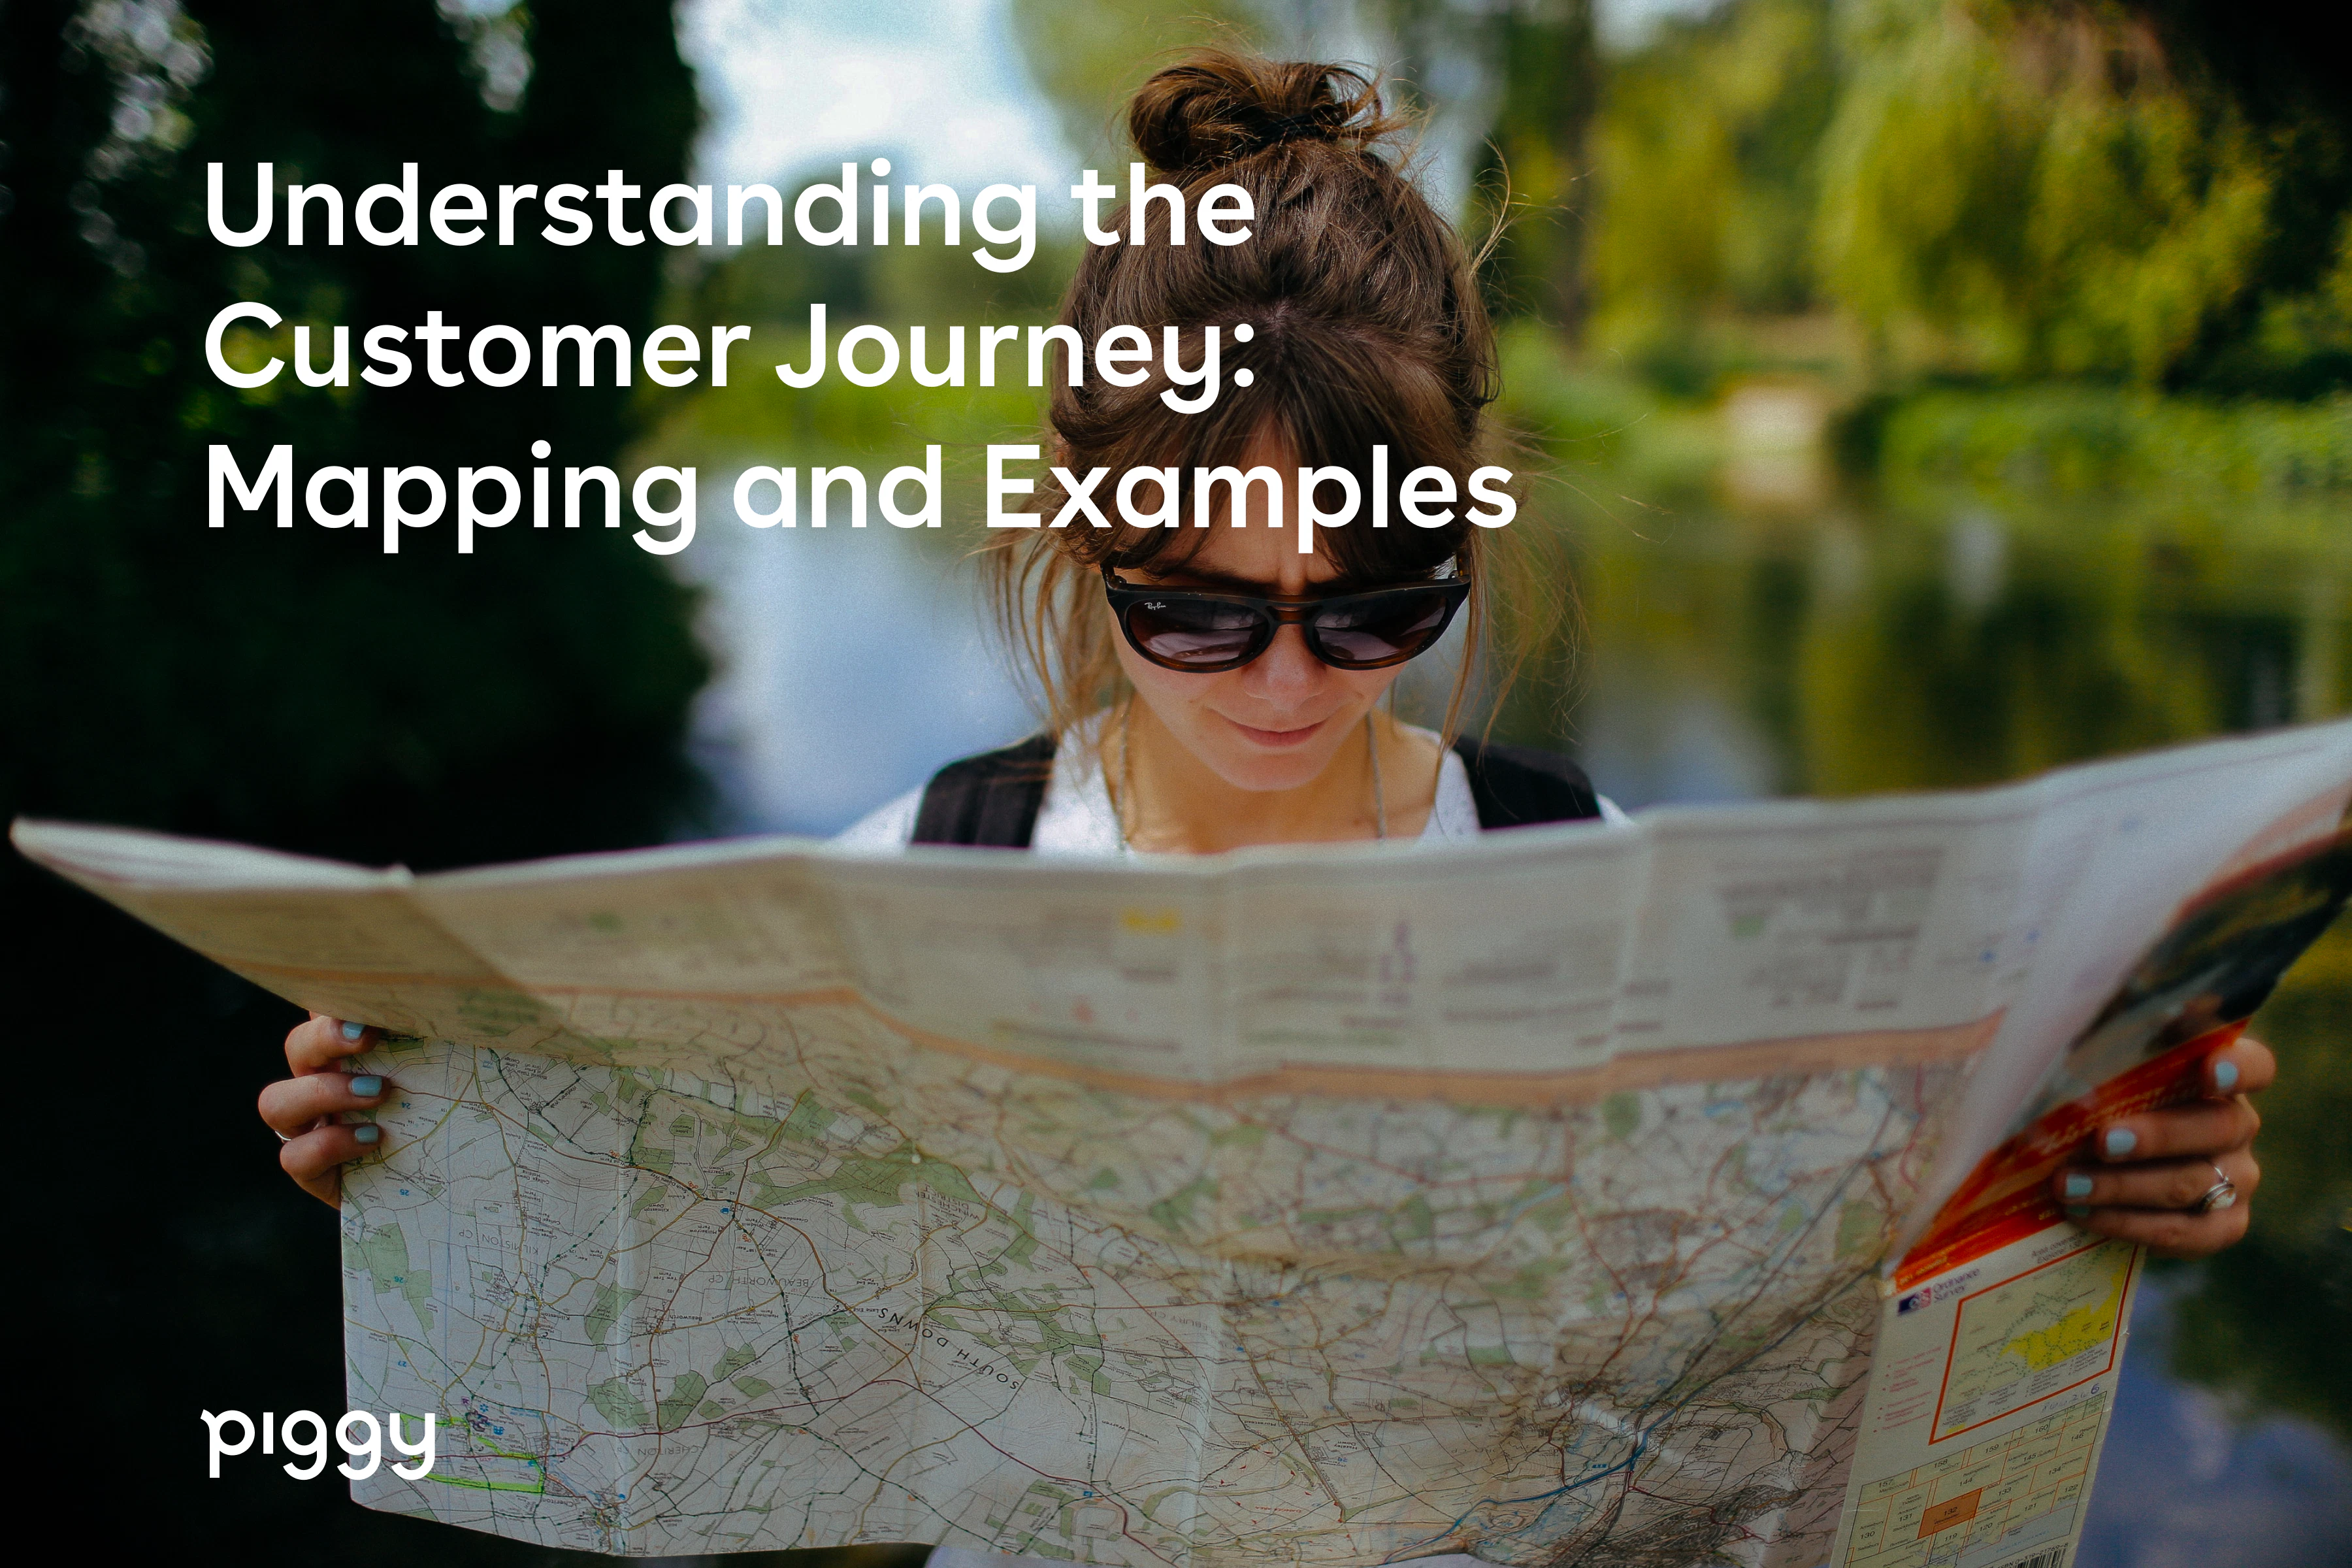 customer-journey-title-image